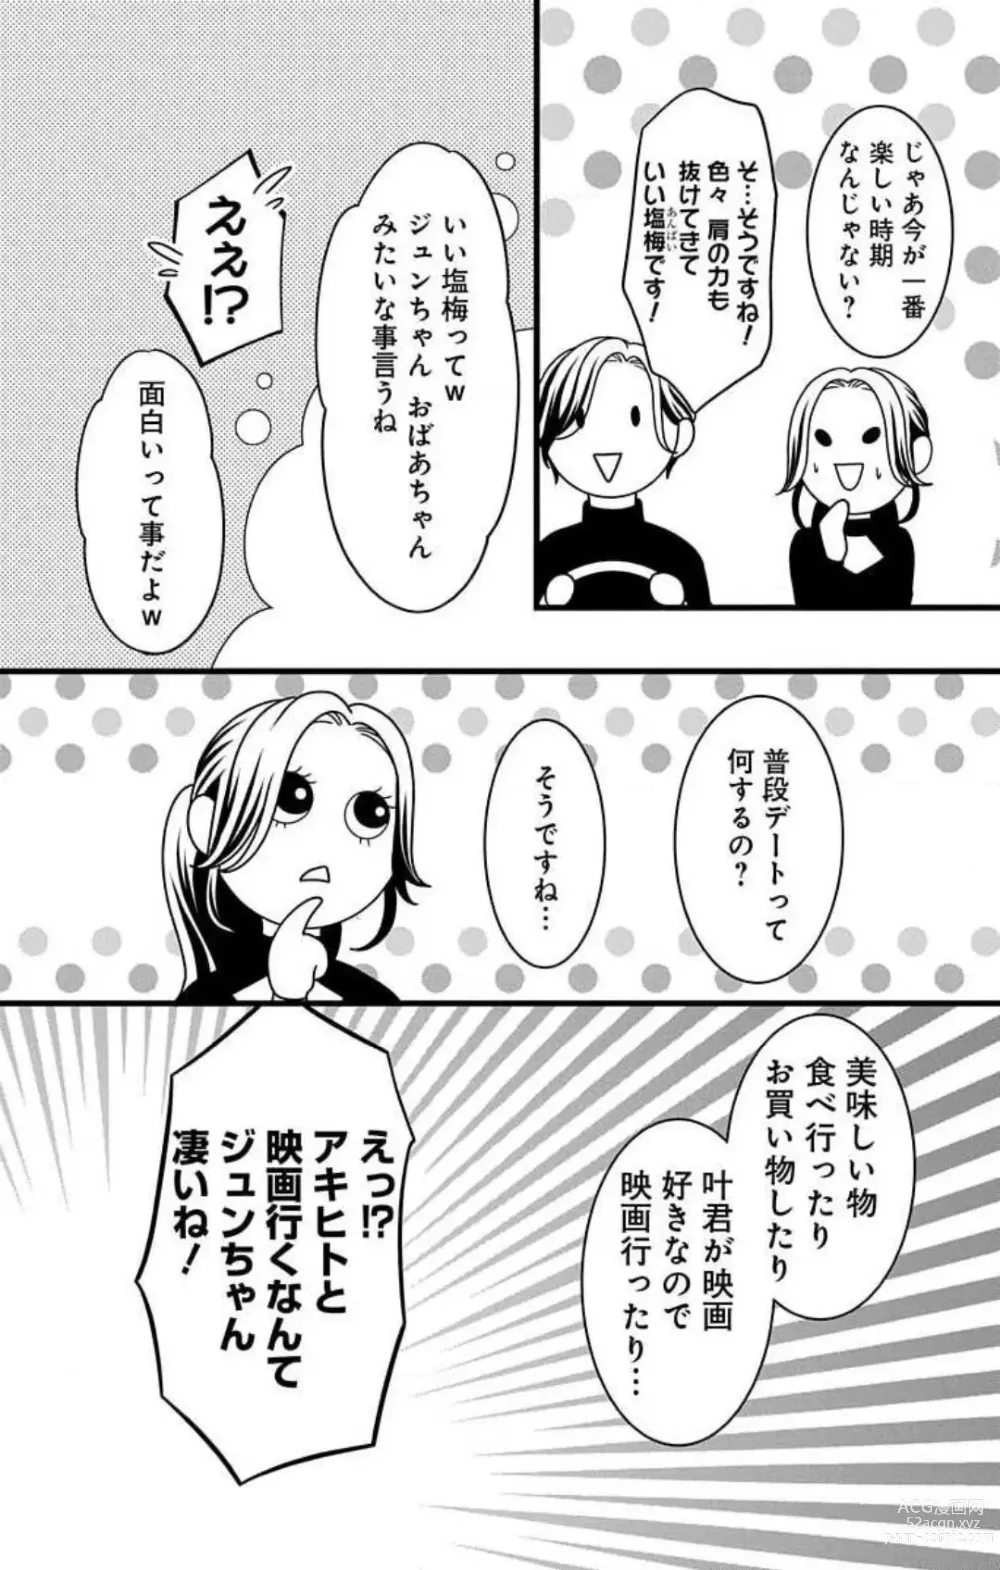 Page 263 of manga Mousou Shoujo 21-27